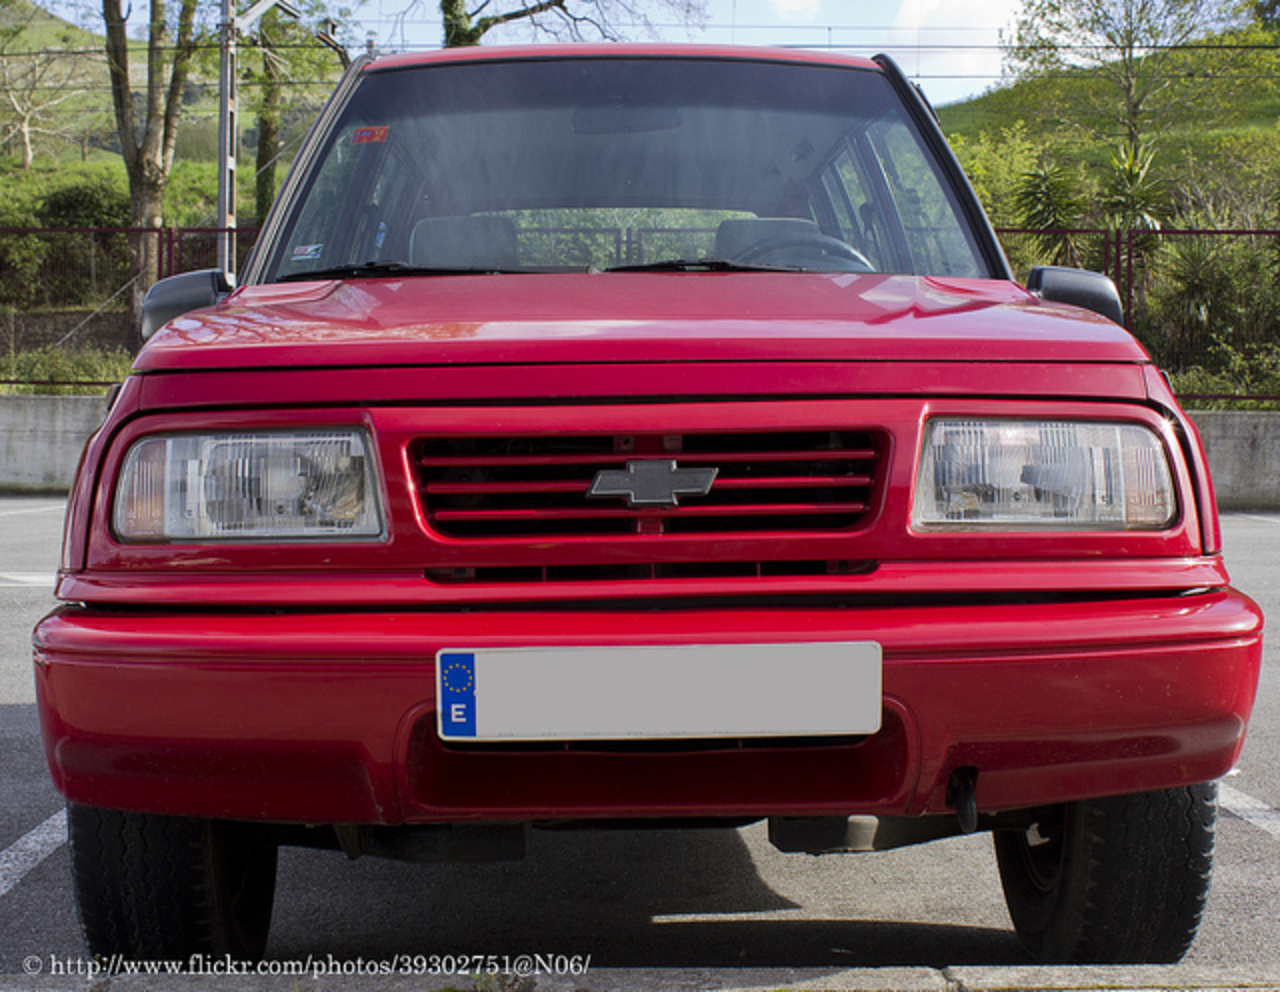 Chevrolet Vitara JX 16 valve | Flickr - Photo Sharing!